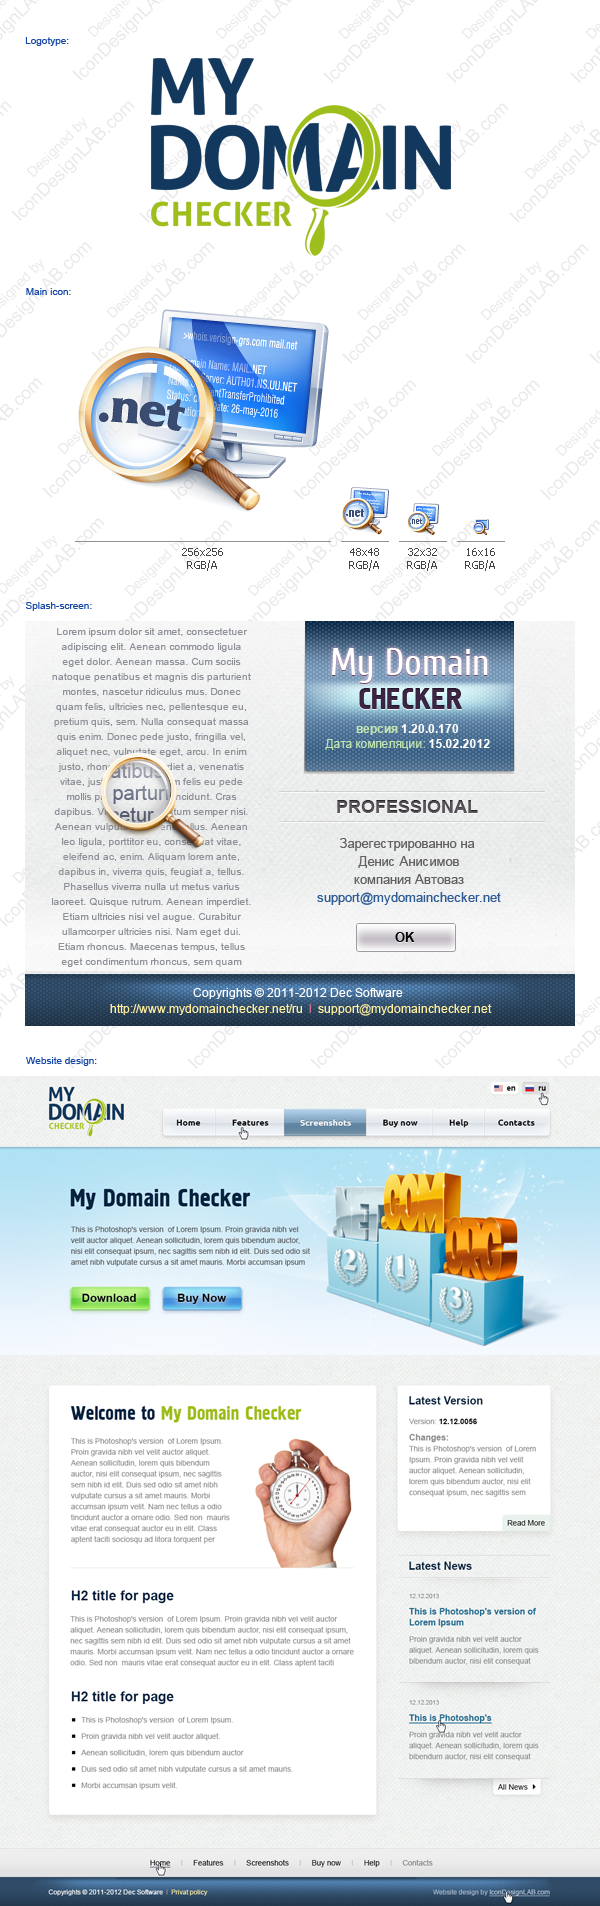 Software Identity Design for My Domian Checker